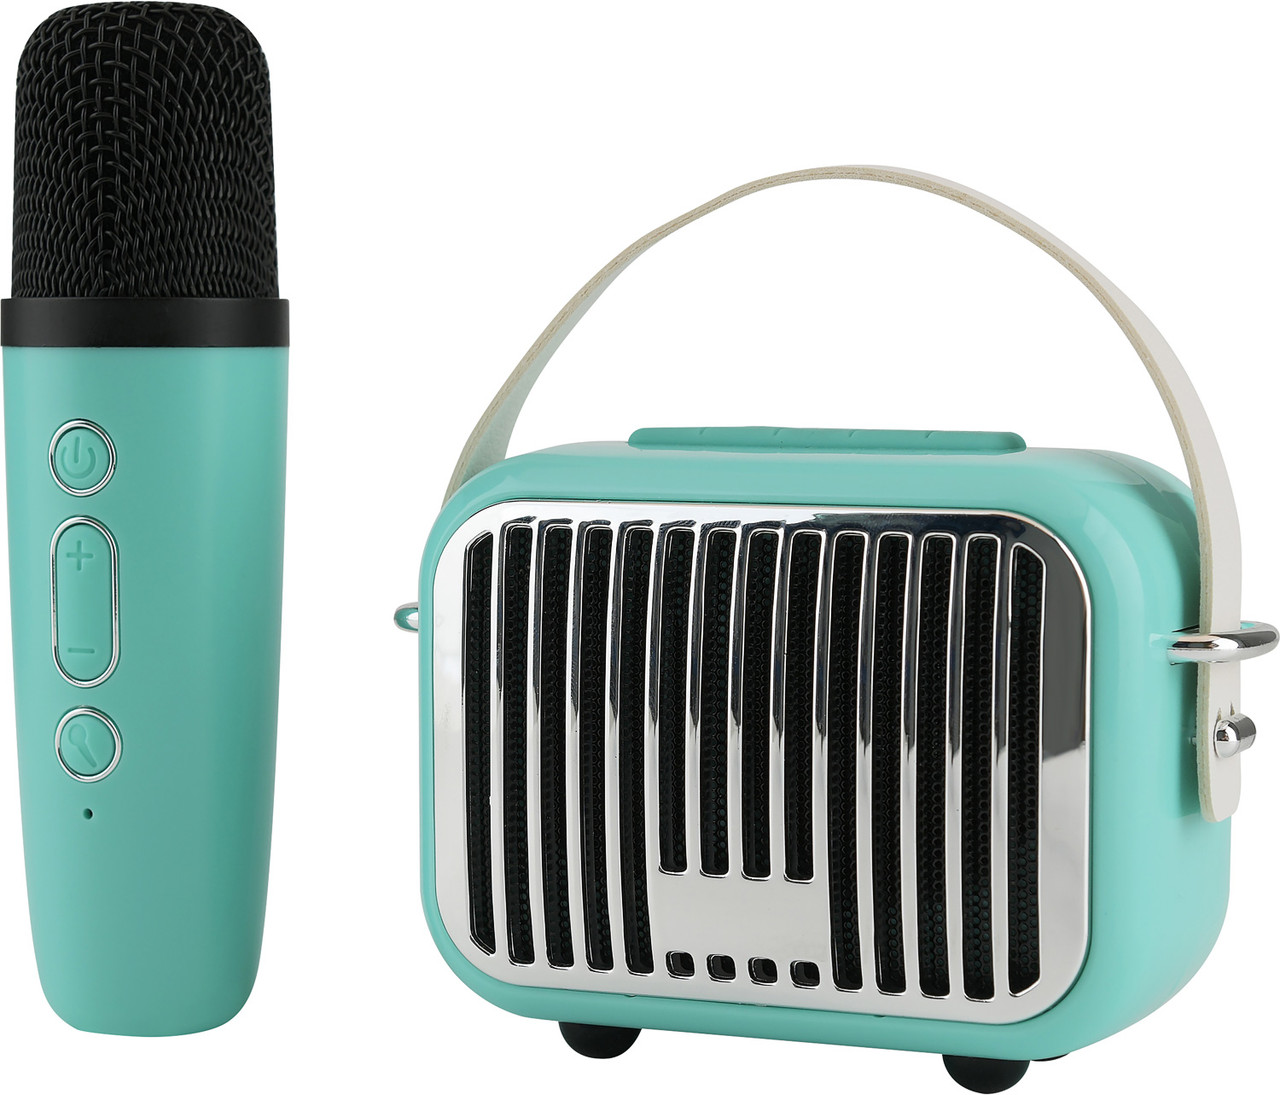 Pocket Karaoke Speaker and Microphone Combo - Teal Edition 3